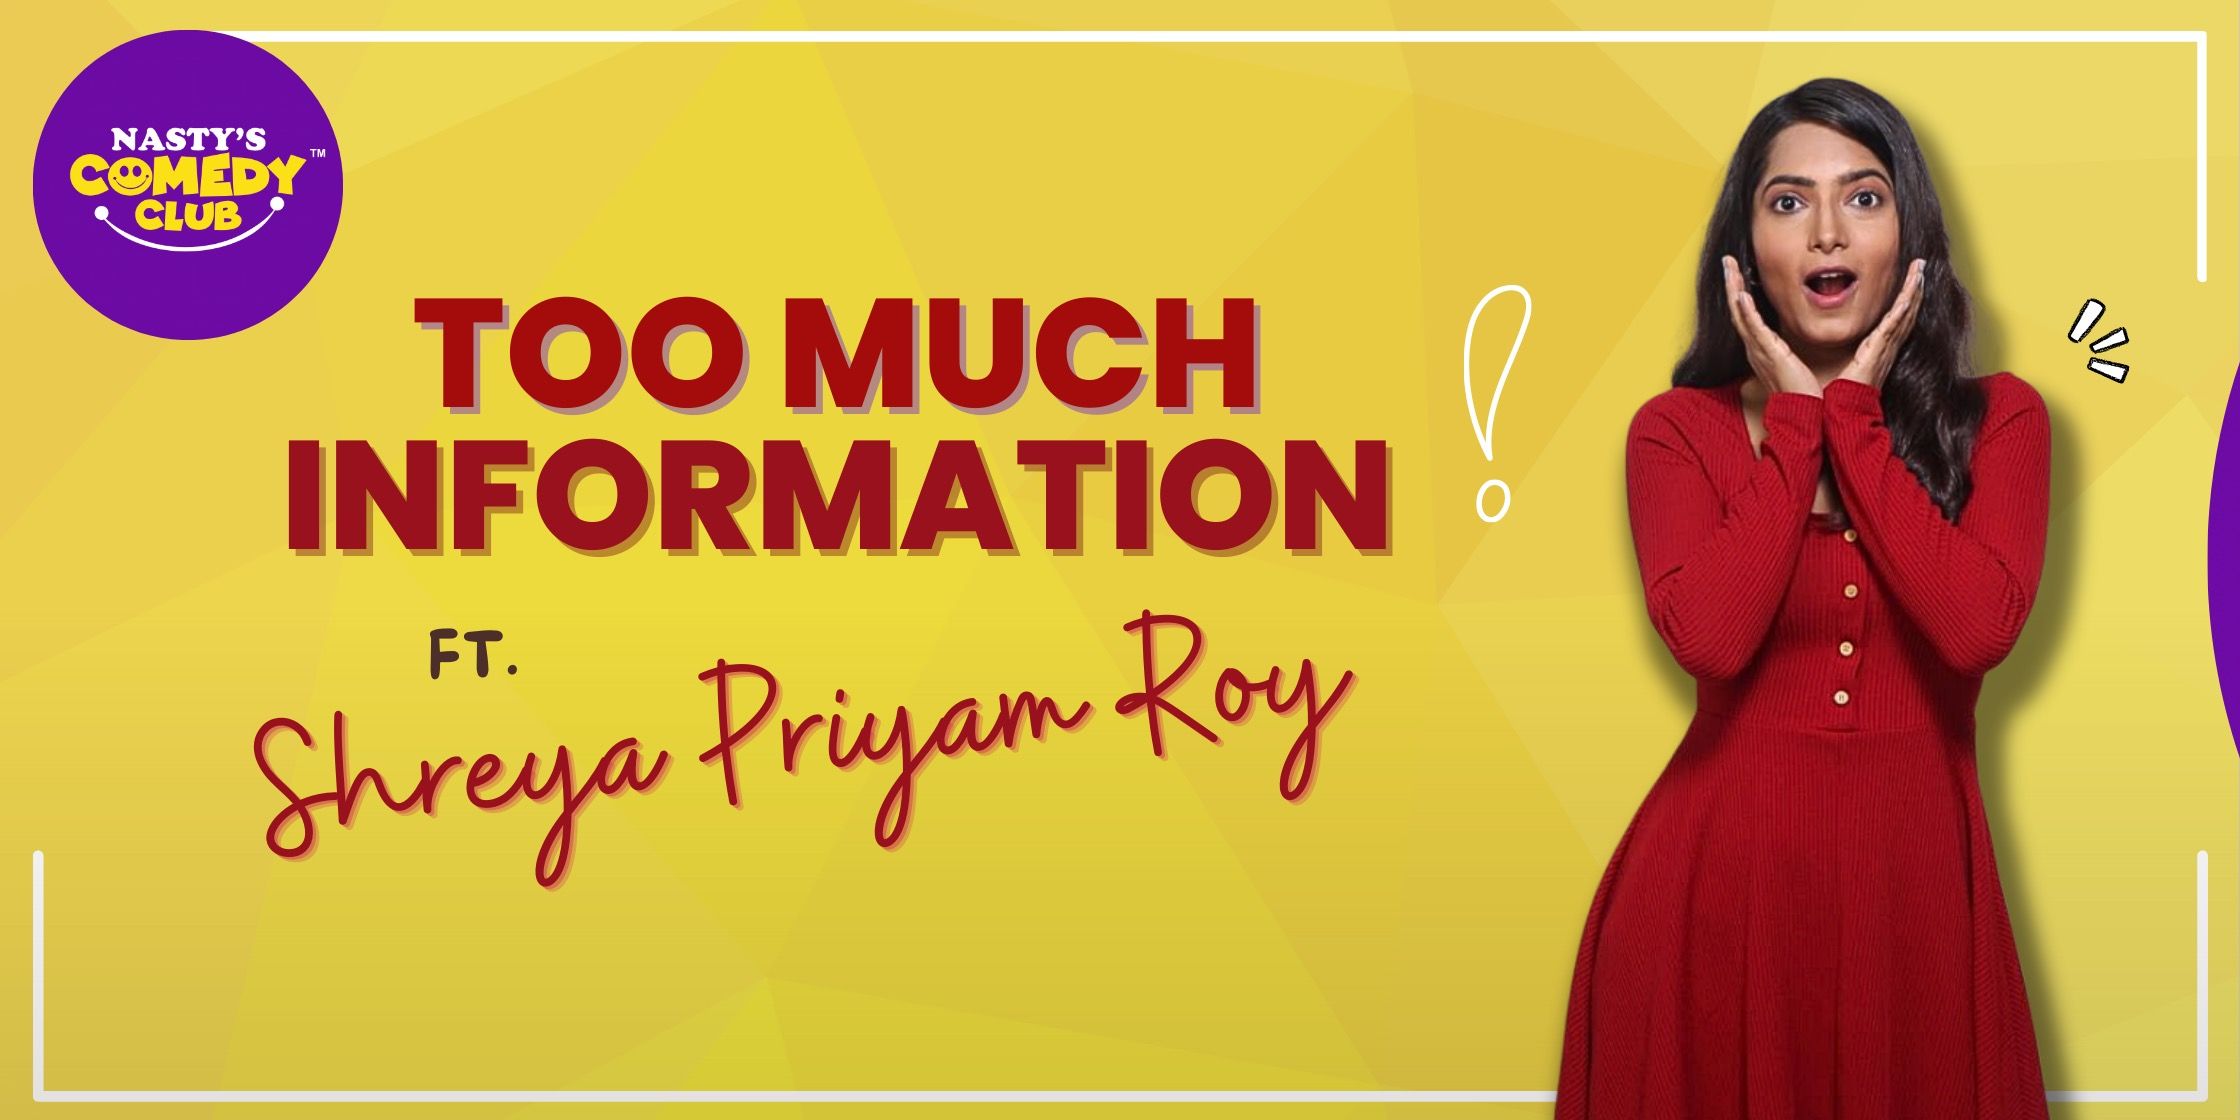 Too Much Information! FT.Shreya Priyam Roy in Pune